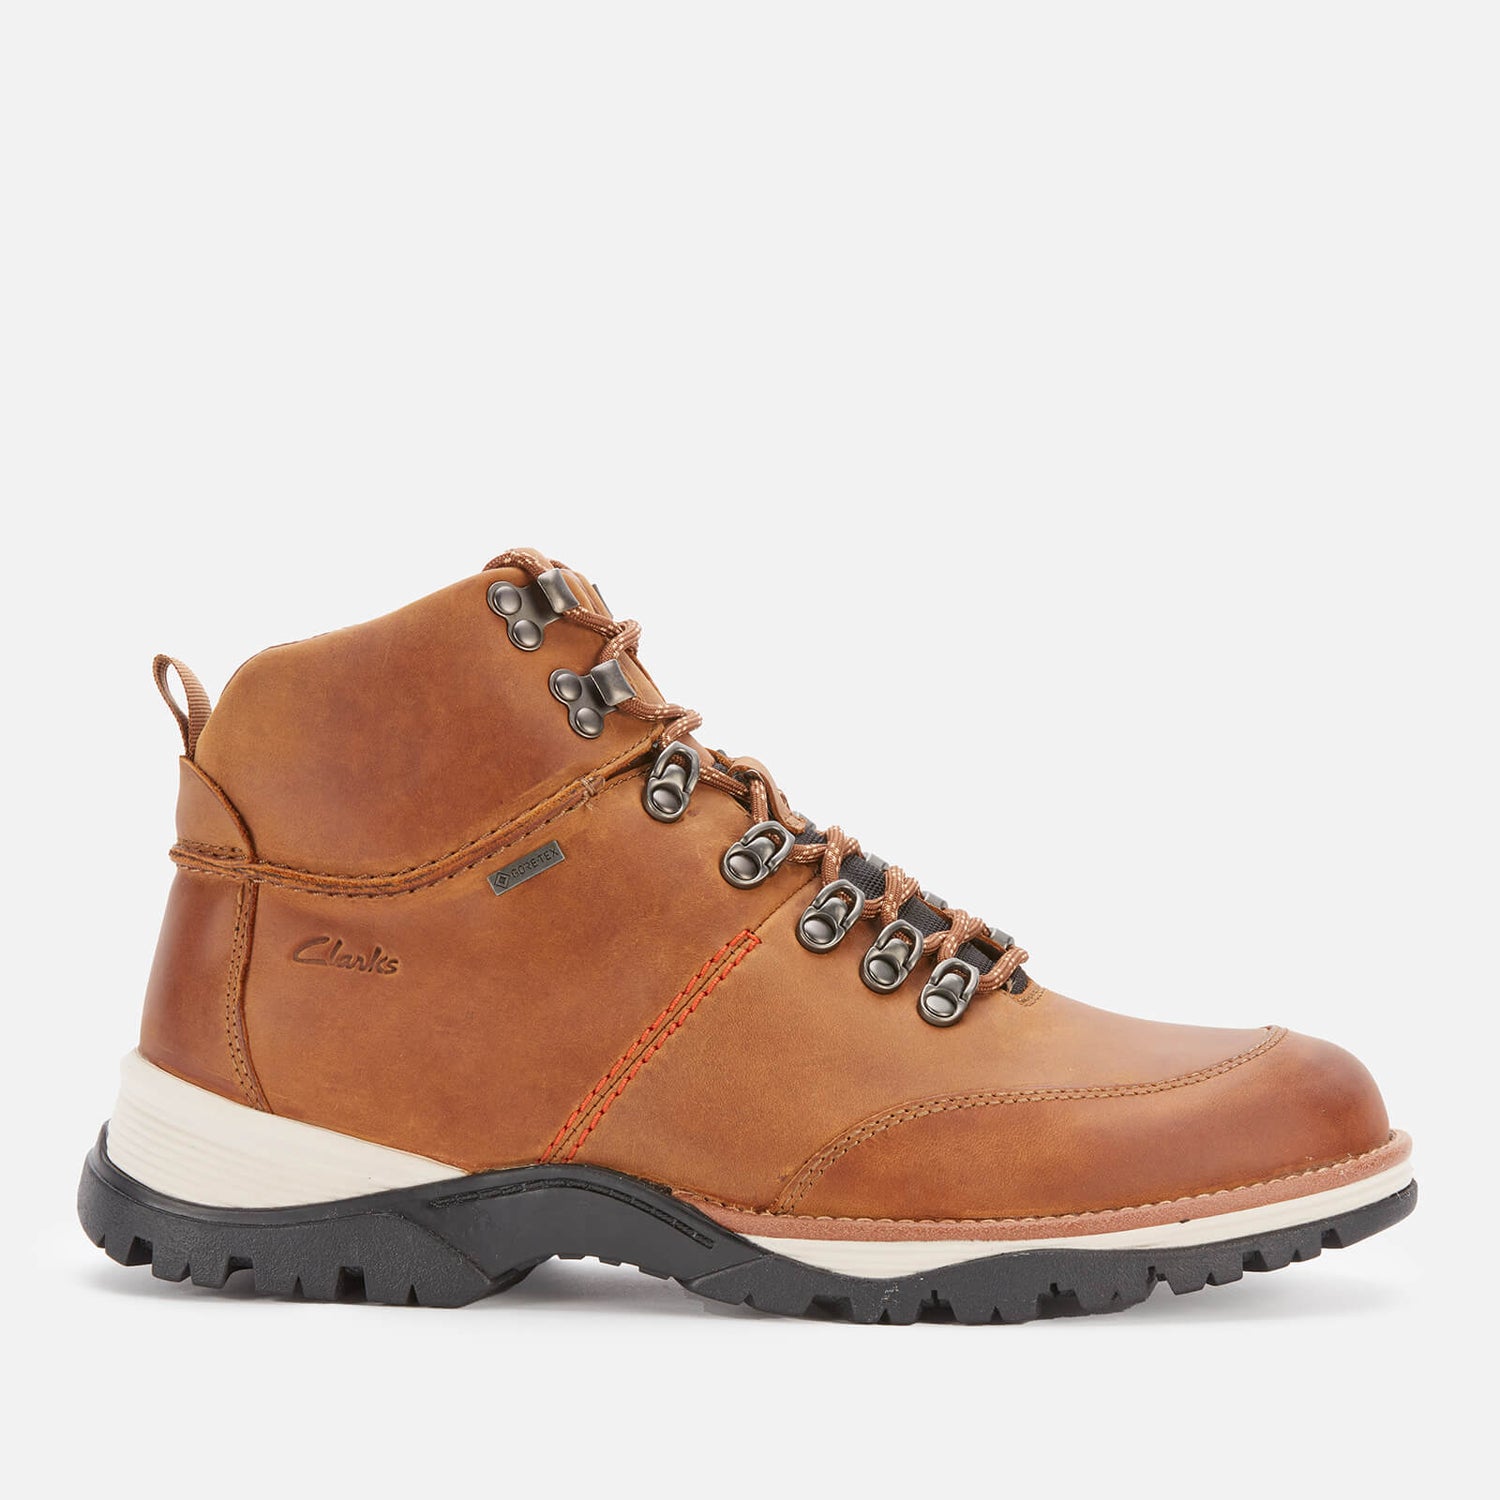 Clarks Men's Topton Pine Goretex Hiking Style Boots - Cognac - UK 7